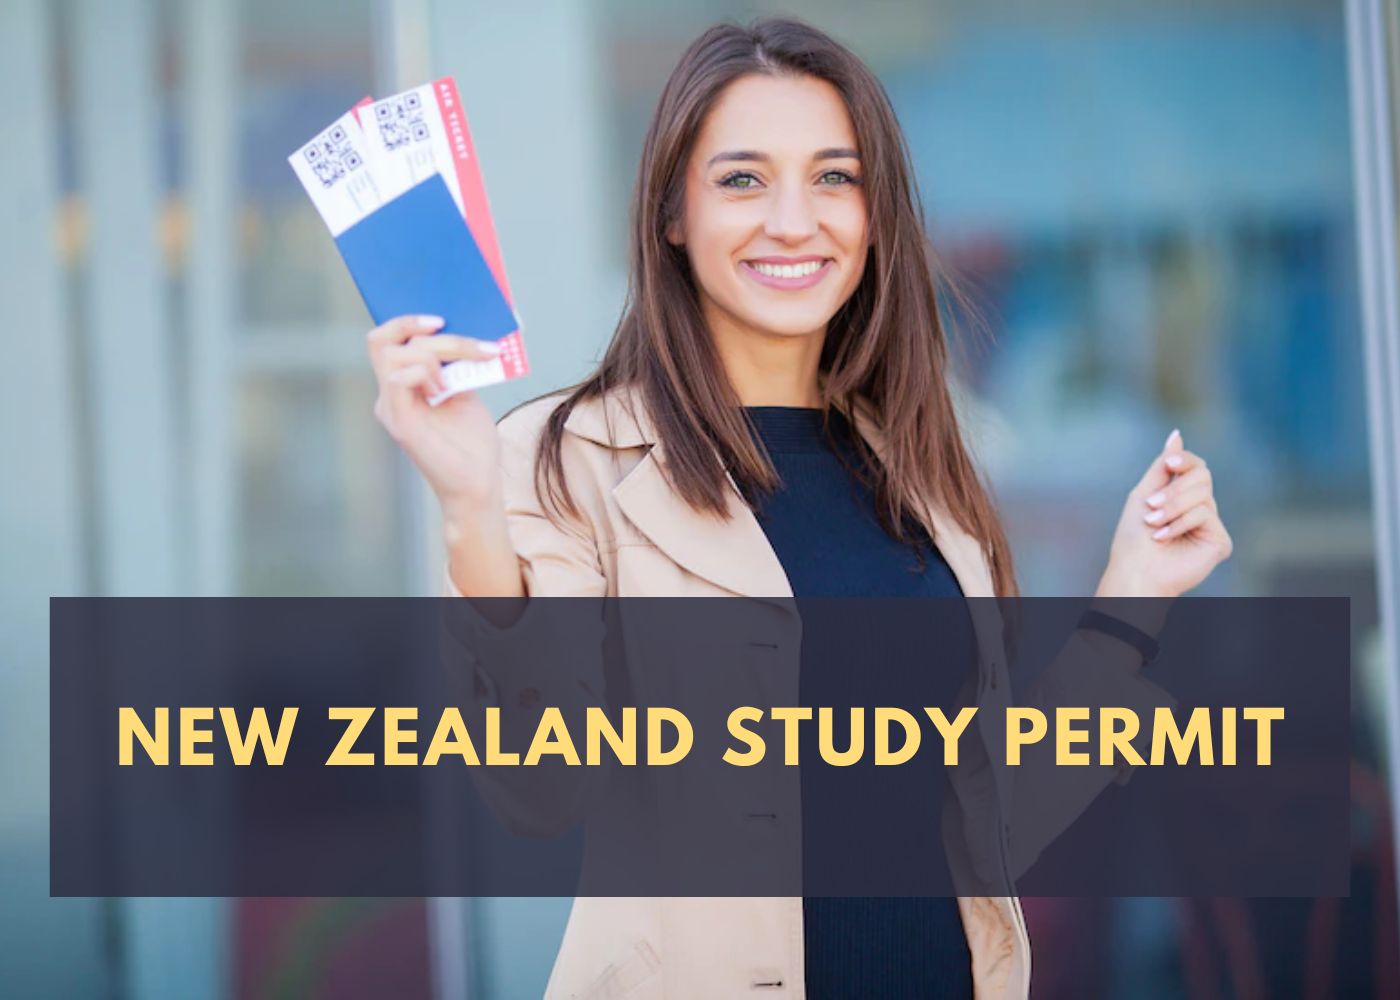 New Zealand Study Permit